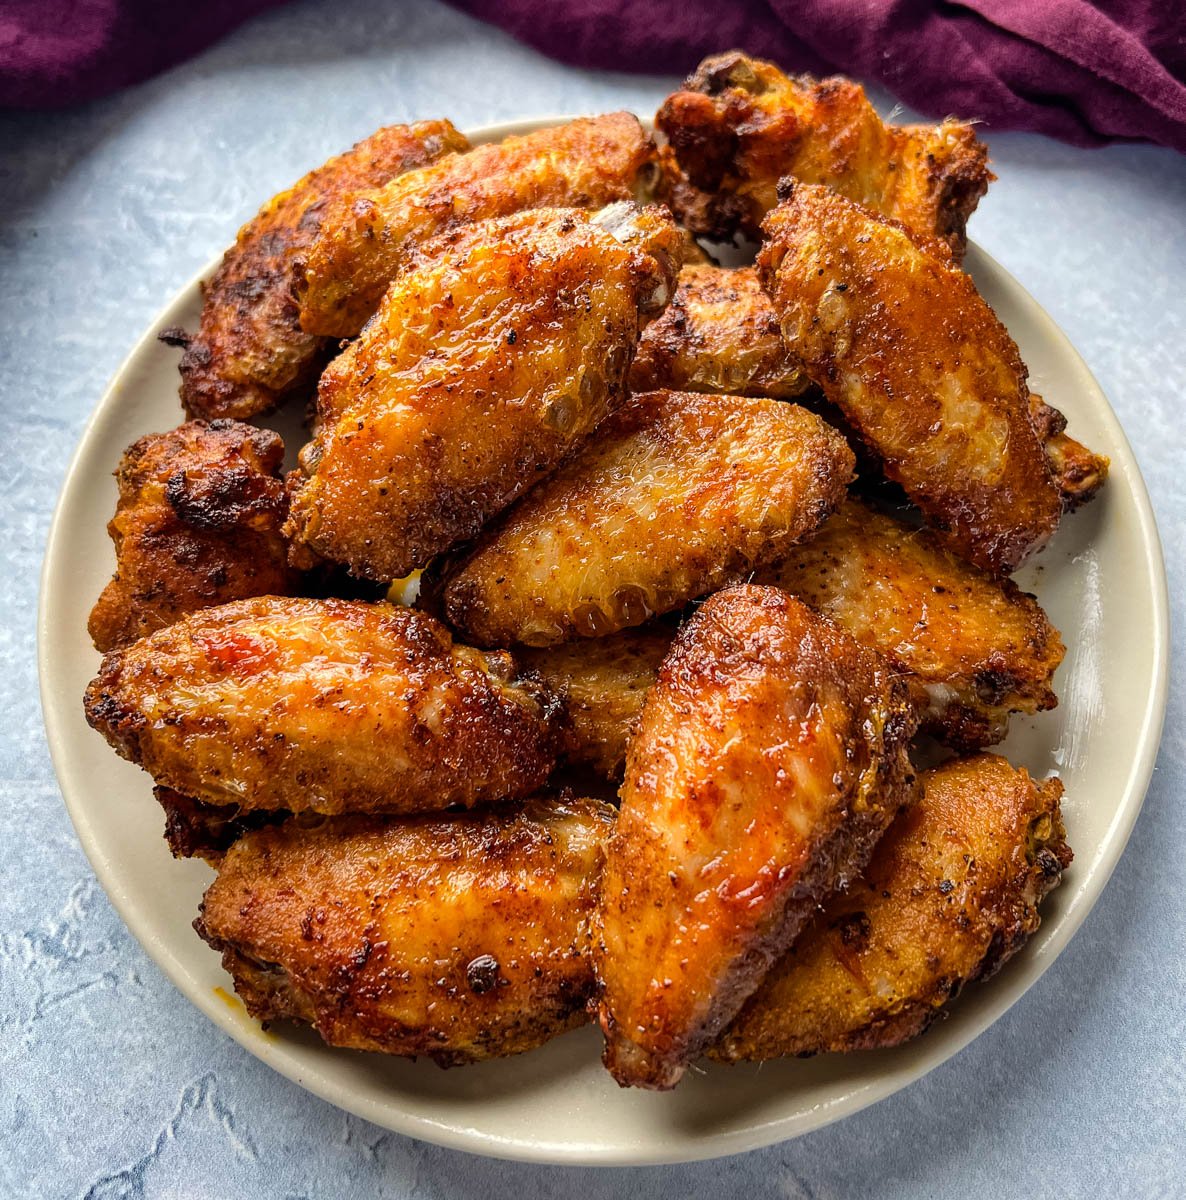 https://www.staysnatched.com/wp-content/uploads/2022/02/dry-rub-chicken-wings-recipe-1.jpg